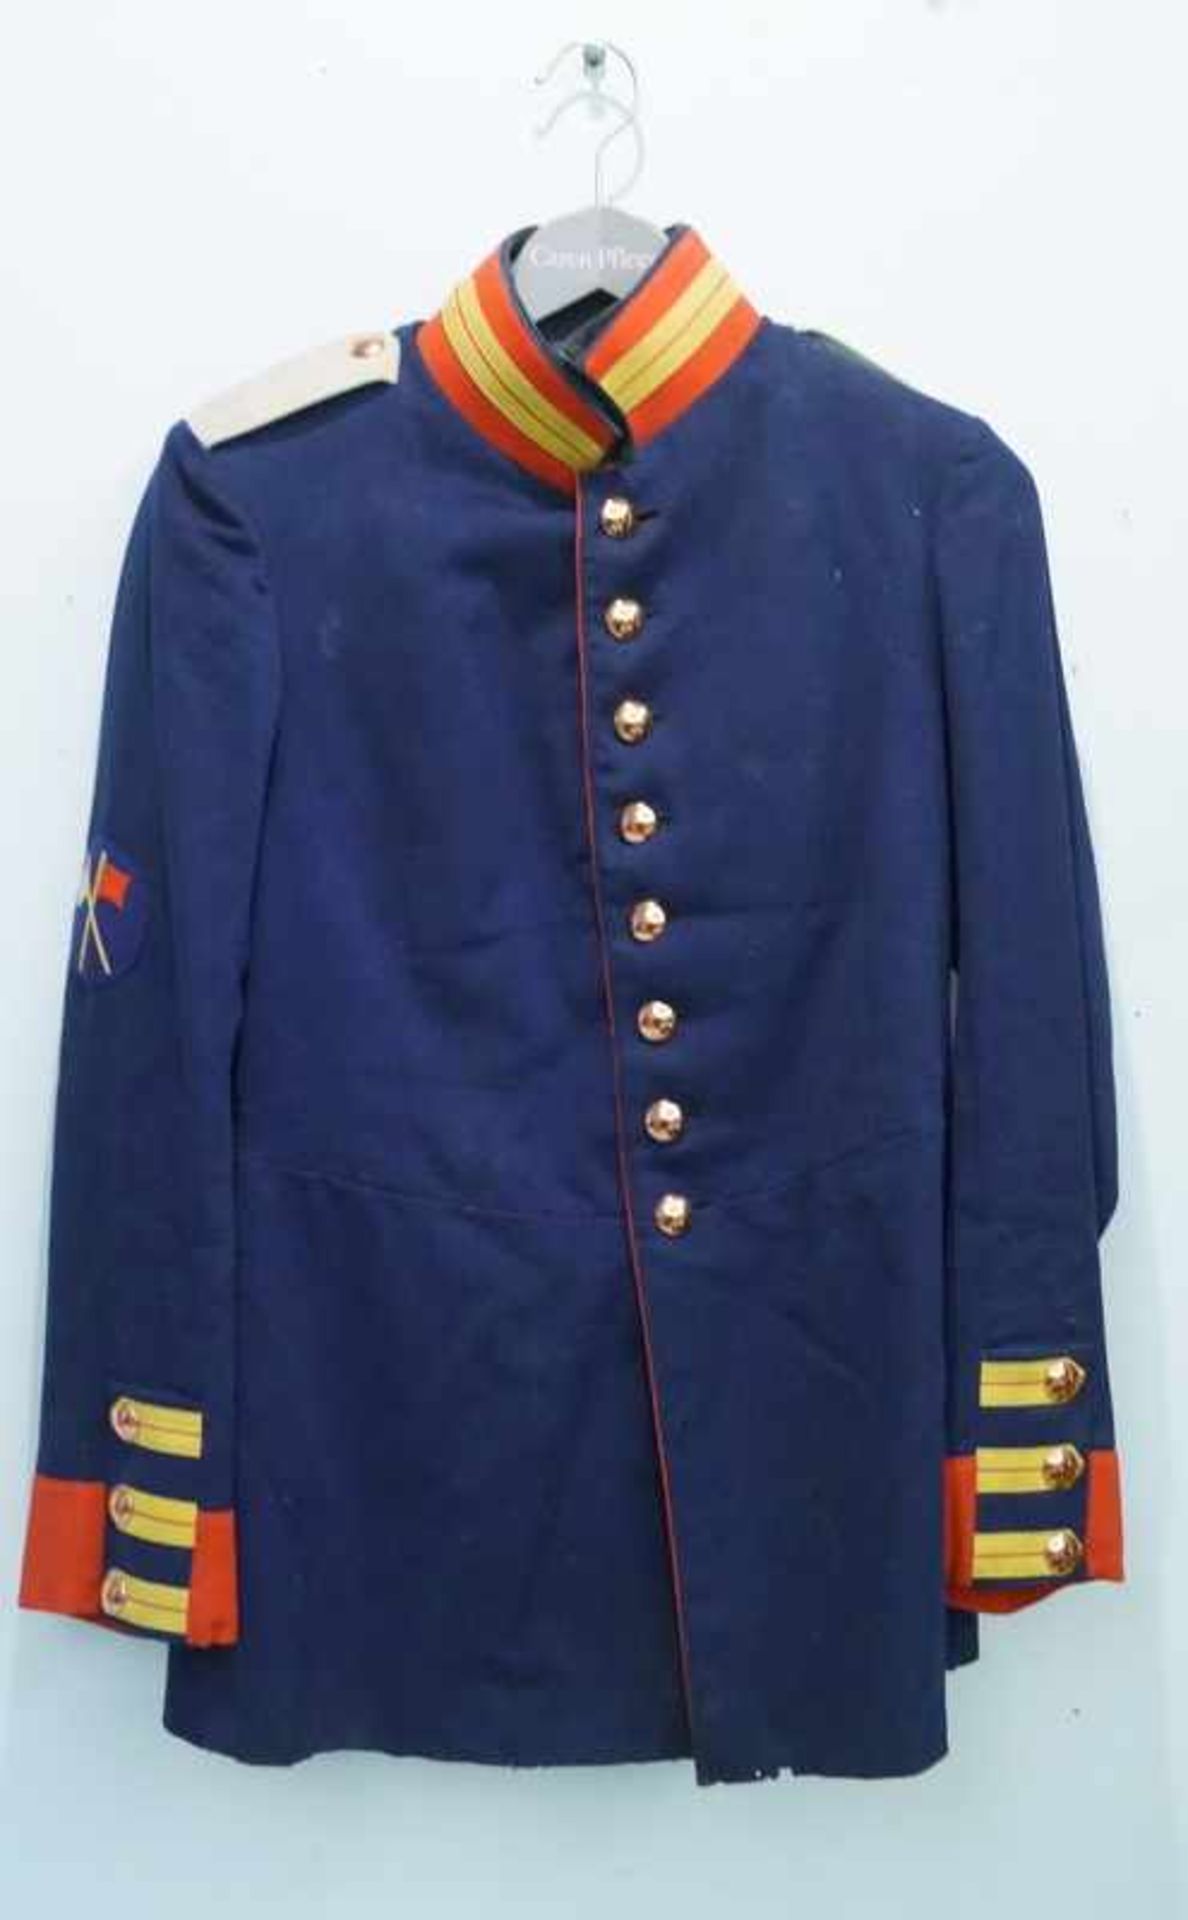 Gefreiter Uniformrock Preussen, ca. um 1900 - Image 2 of 3